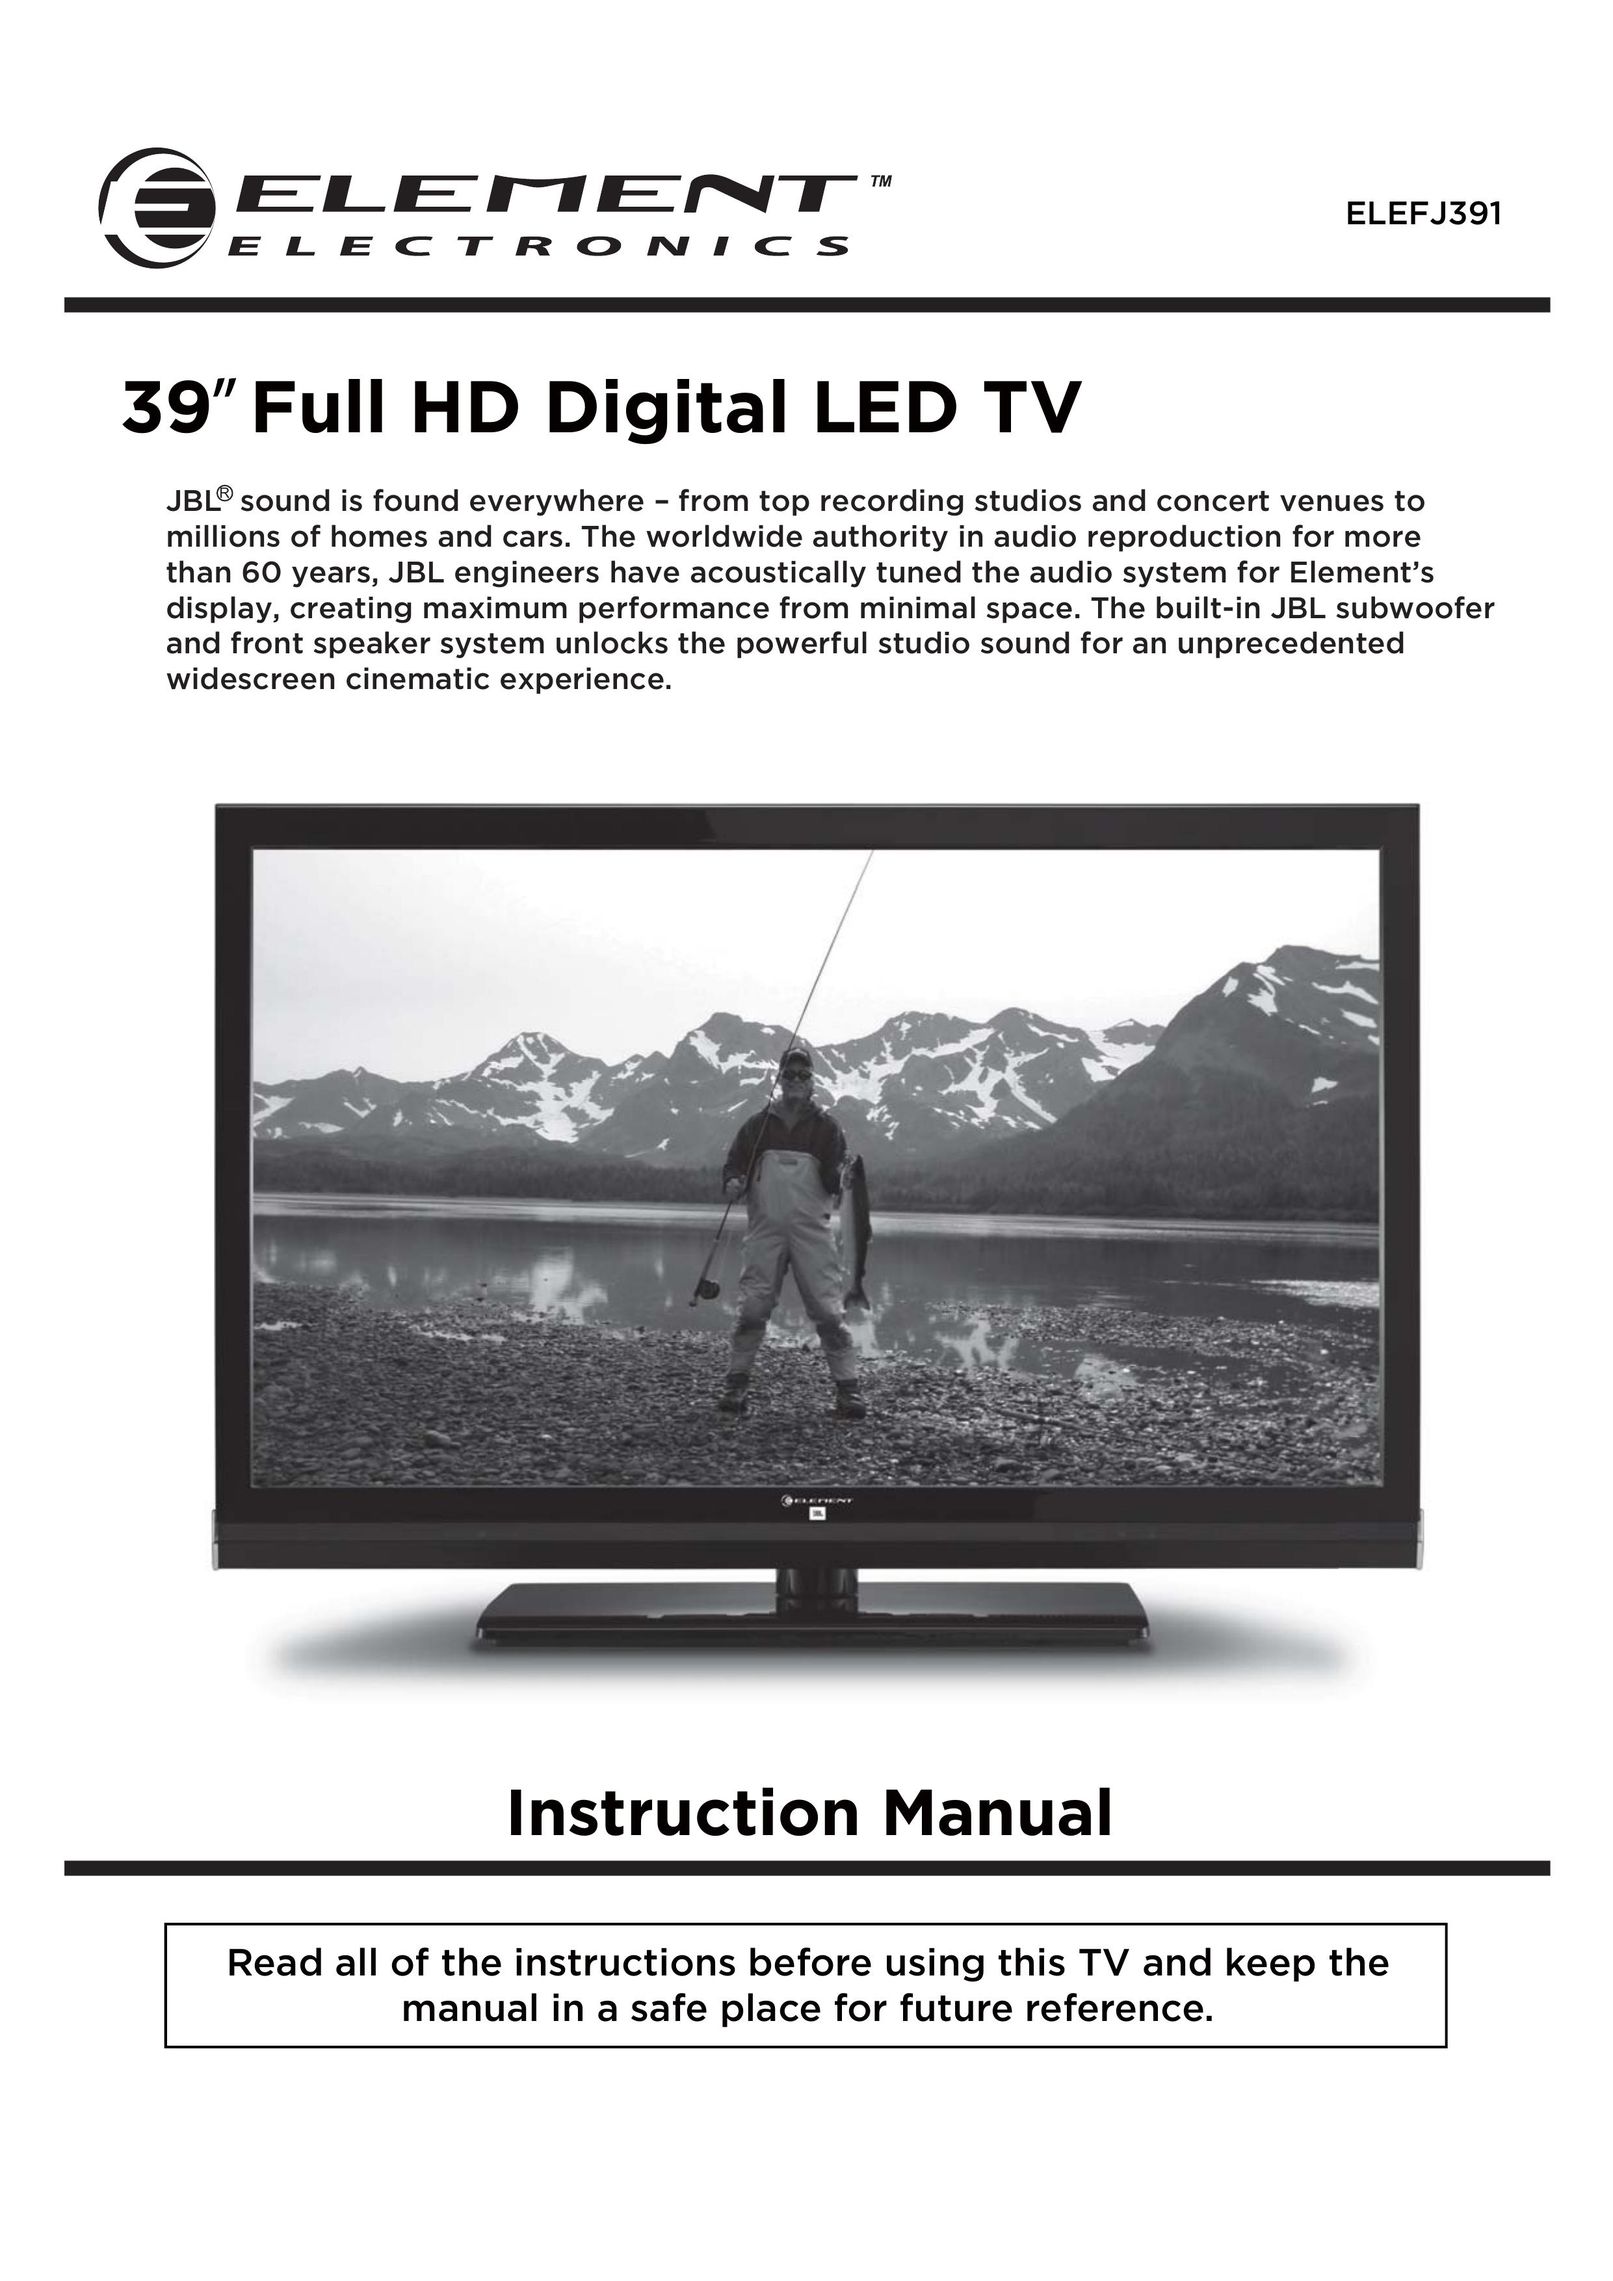 Element Electronics ELEFJ391 TV Receiver User Manual